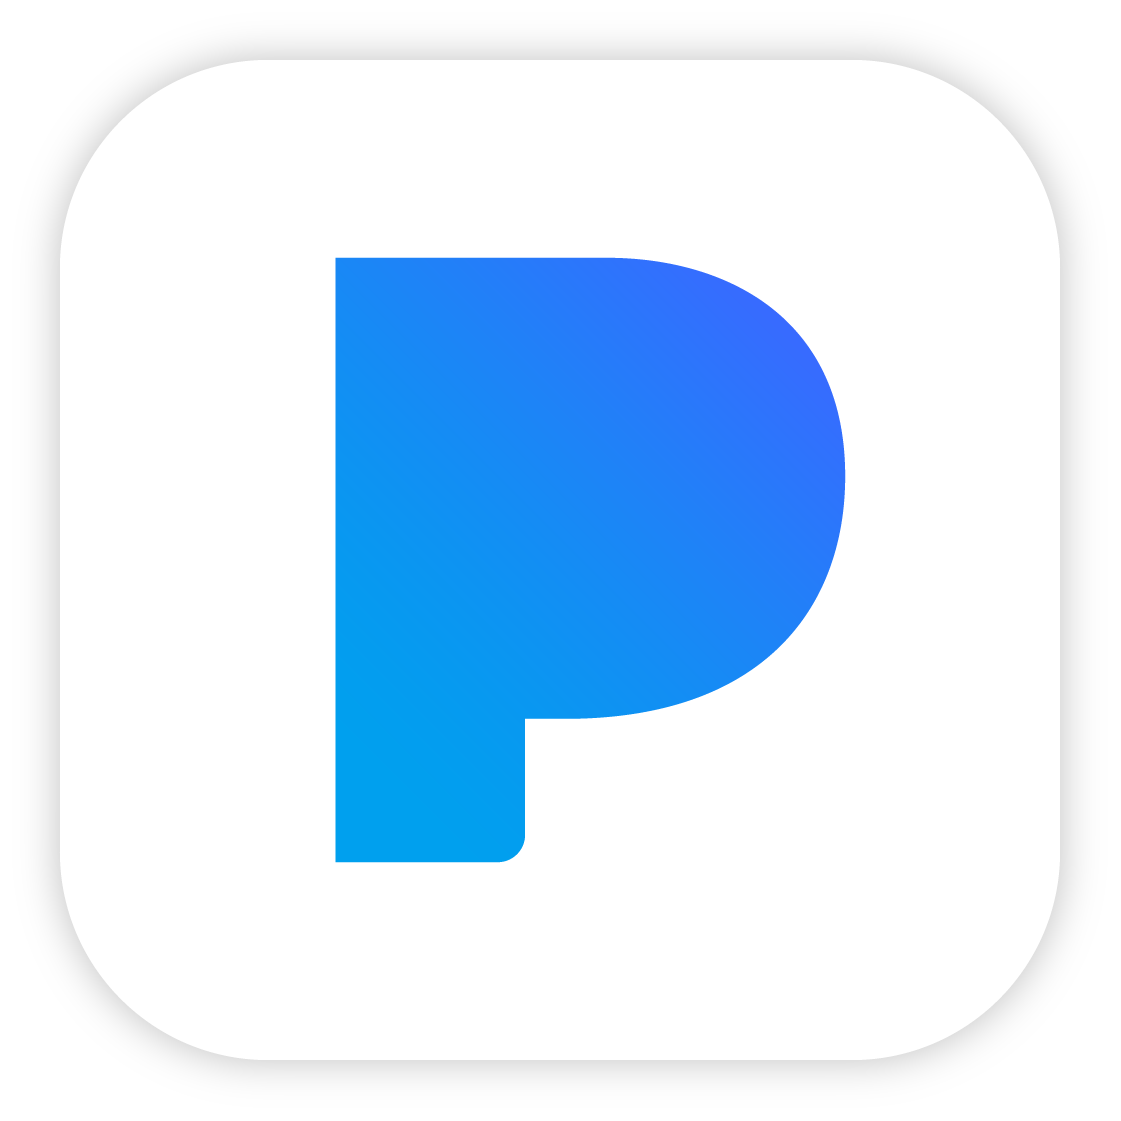 Pandora new logo image 001